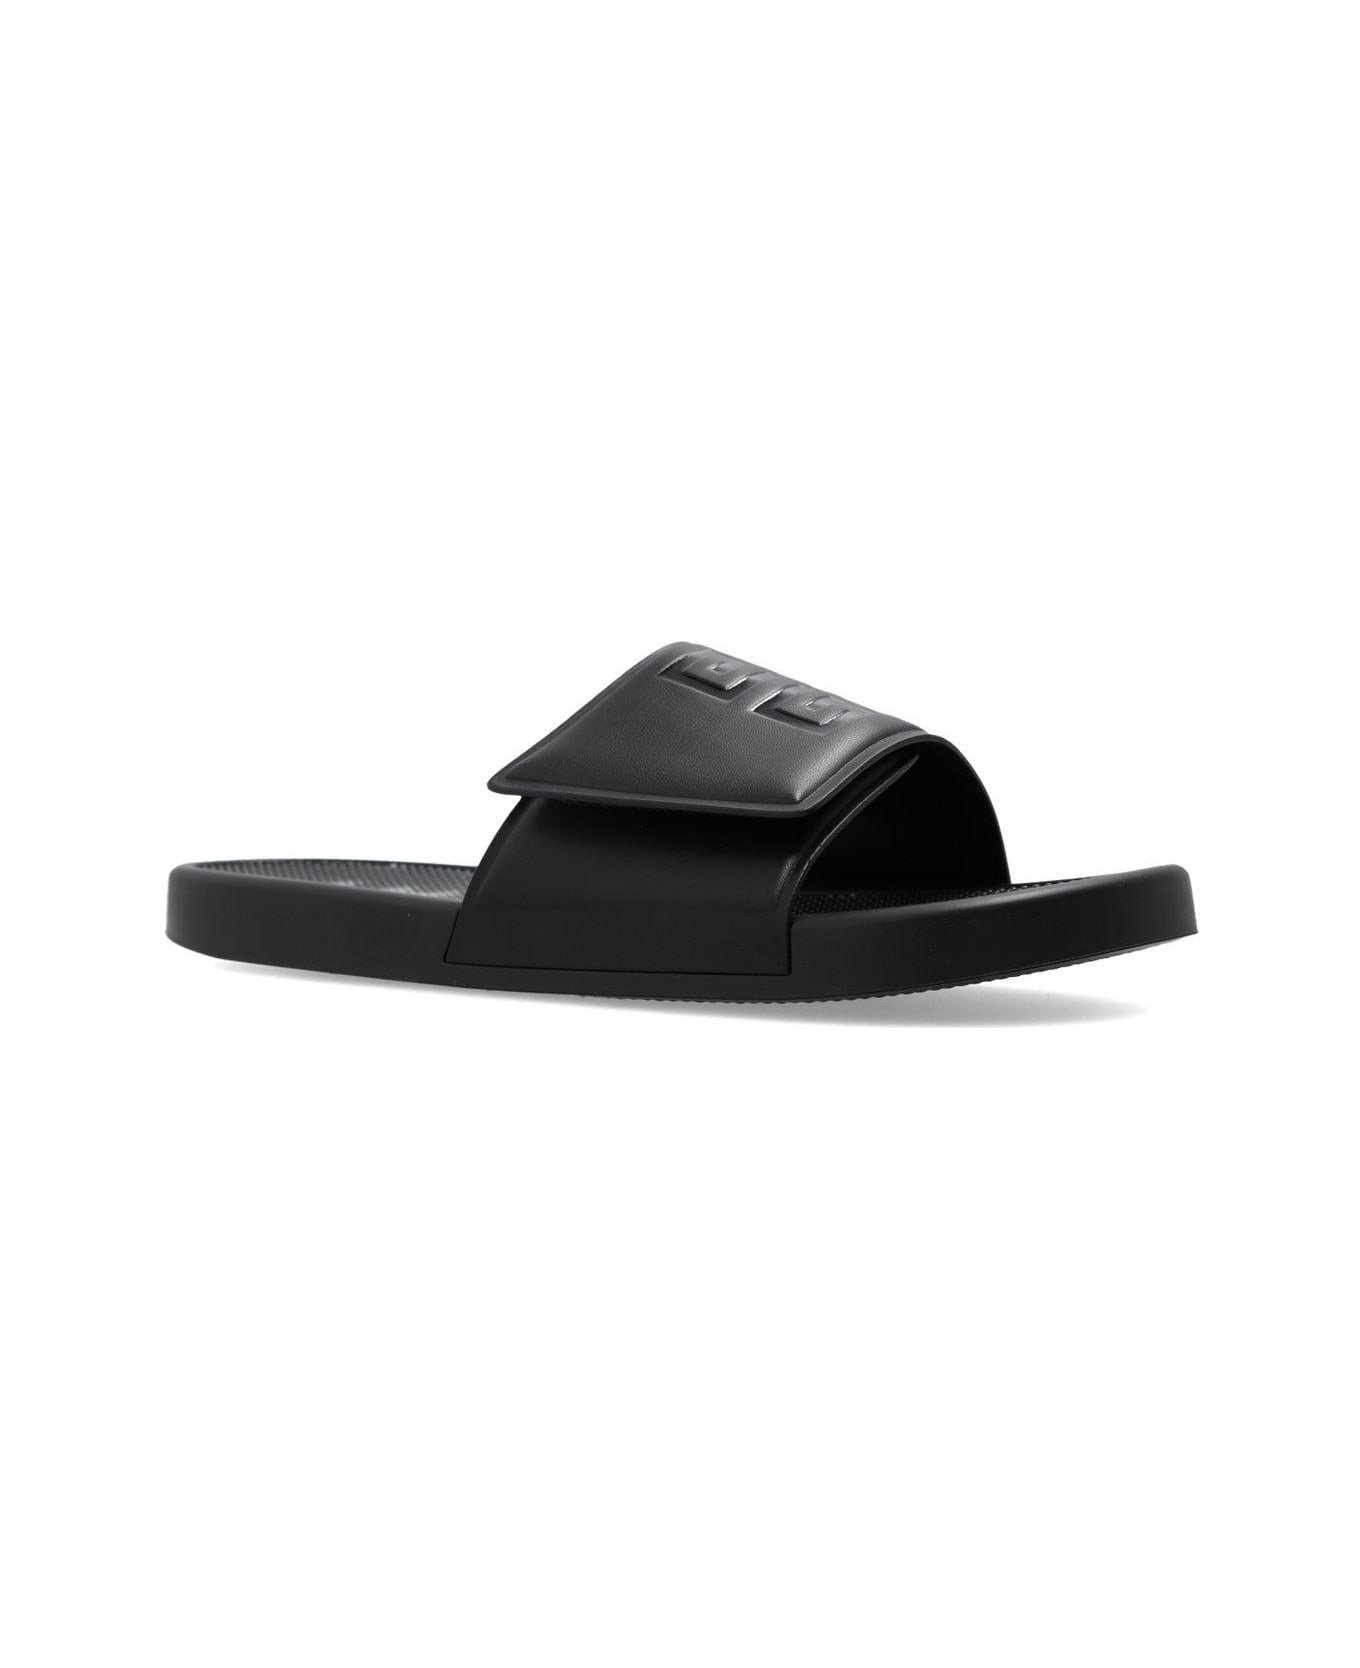 Givenchy 4g Emblem Flat Sandals - White/Black